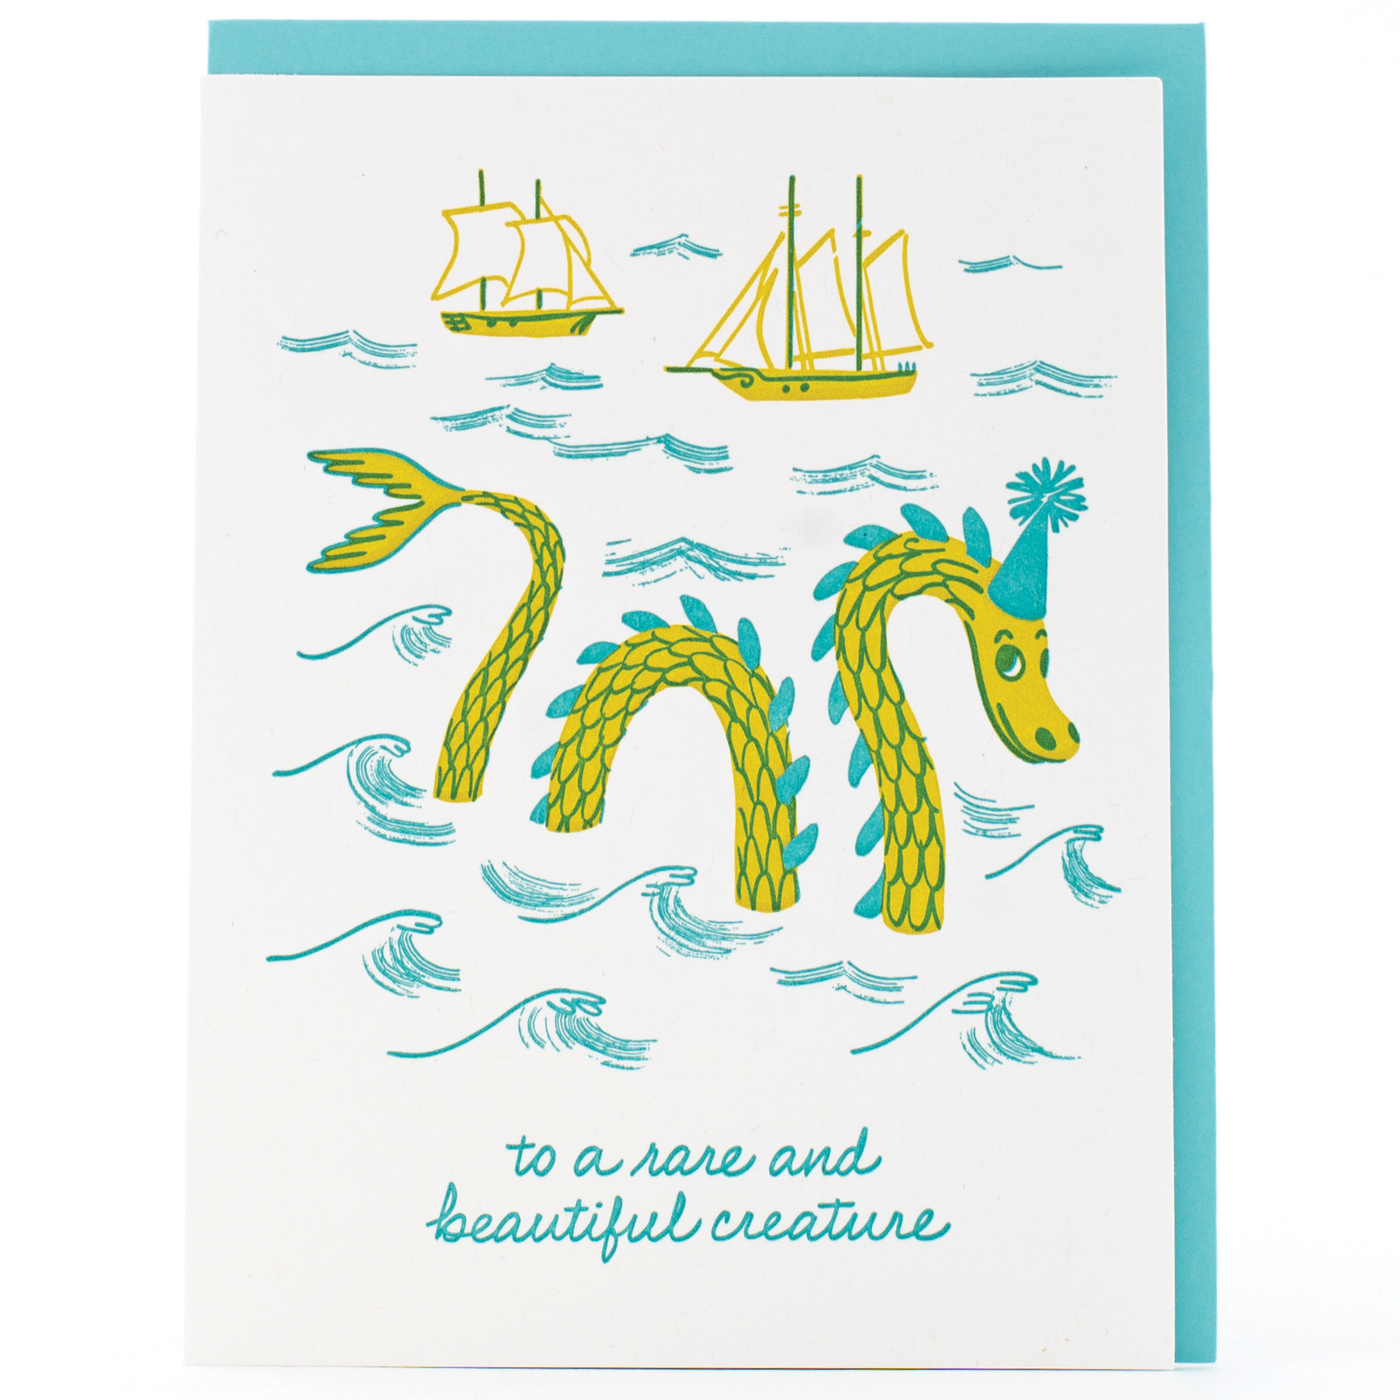 Sea Monster Birthday Card